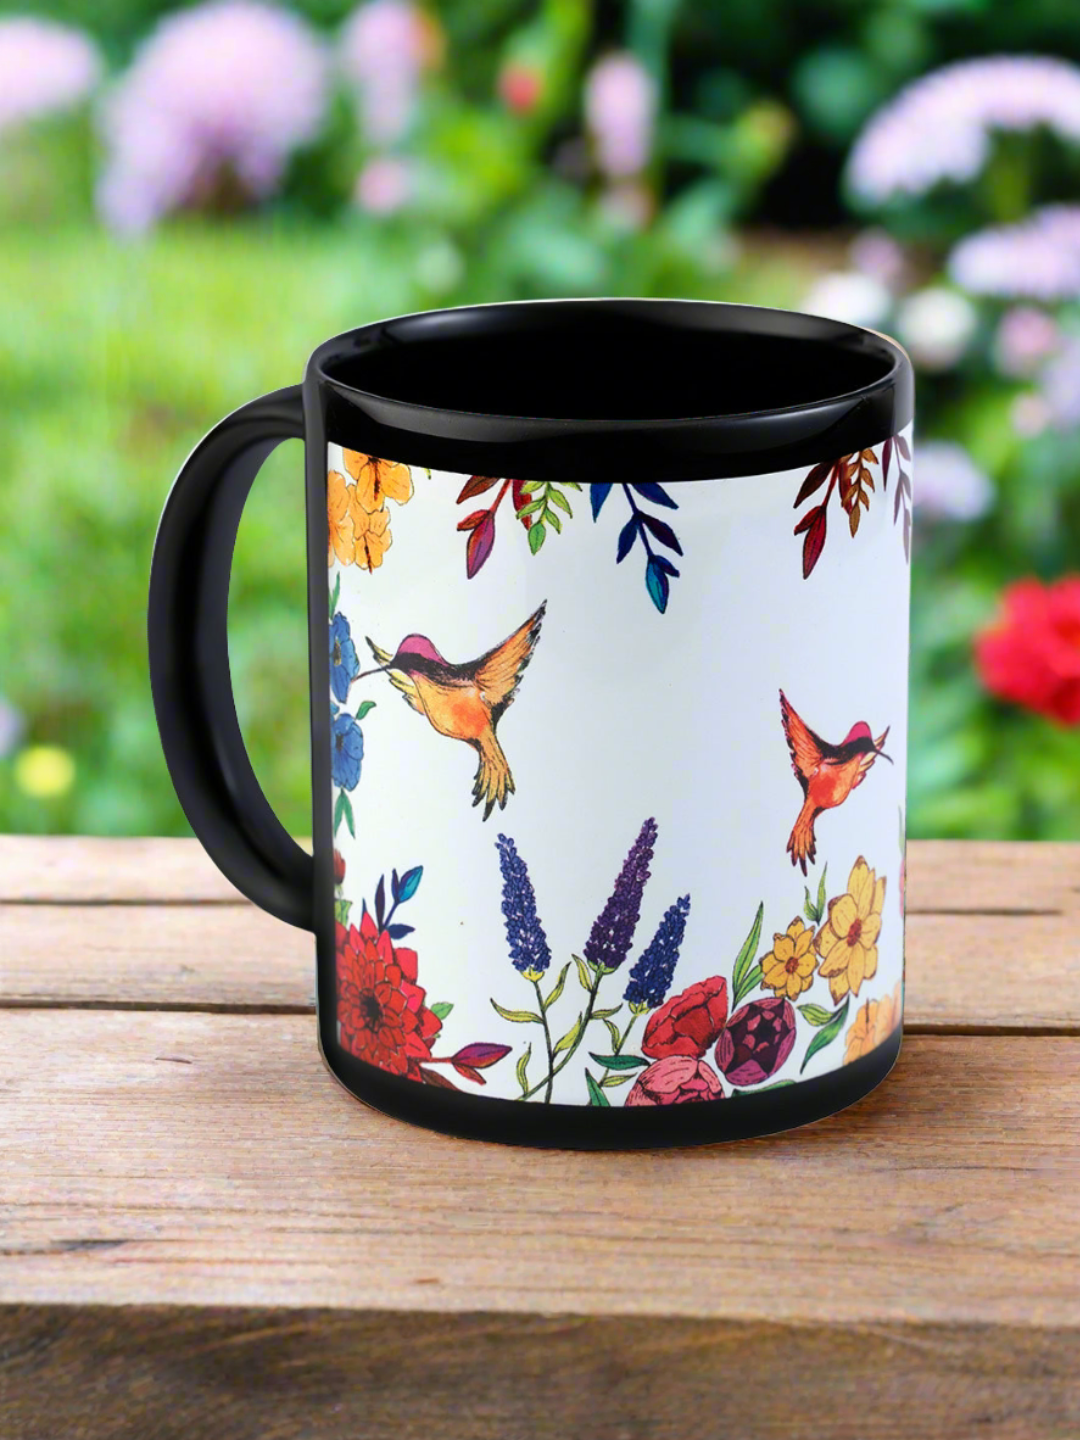 Inspired by Humming Bird |Coffee Cups, Cappuccino Cups|Microwave Safe Coffee Mug, Tea Mug|Perfect for Gifting